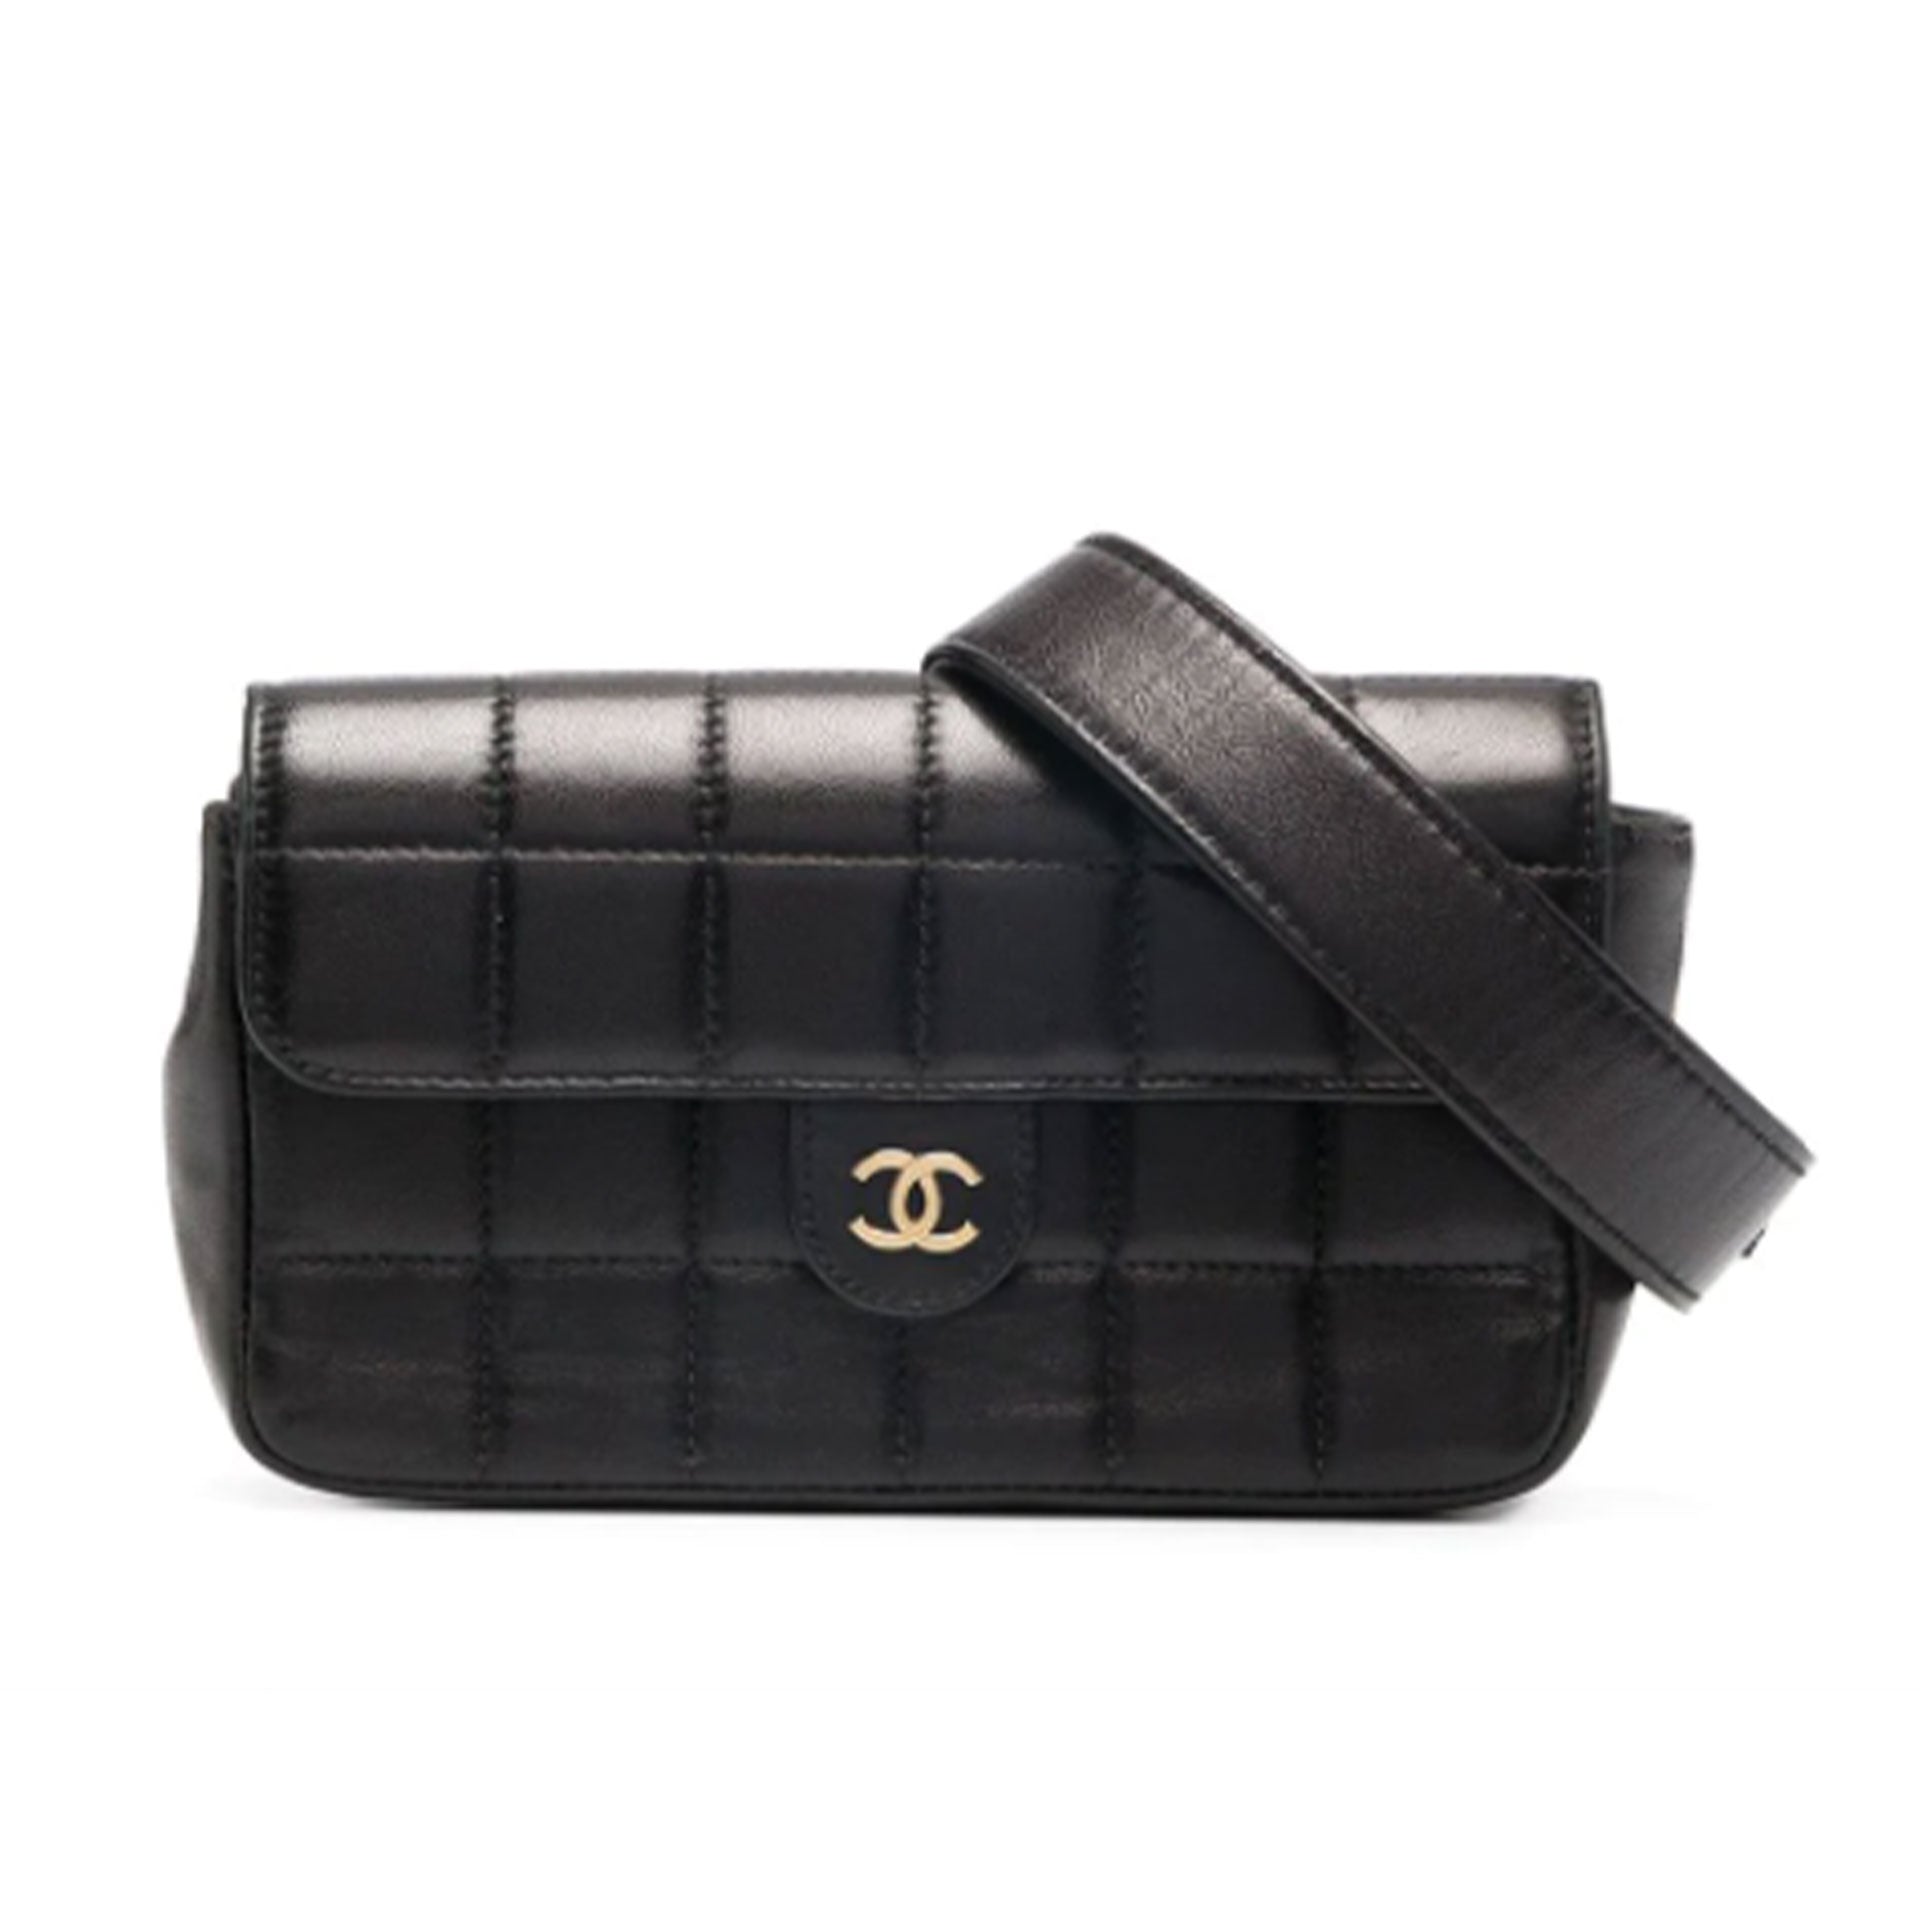 Chanel Take Away Box Bag Rare Limited Edition Runway Shanghai